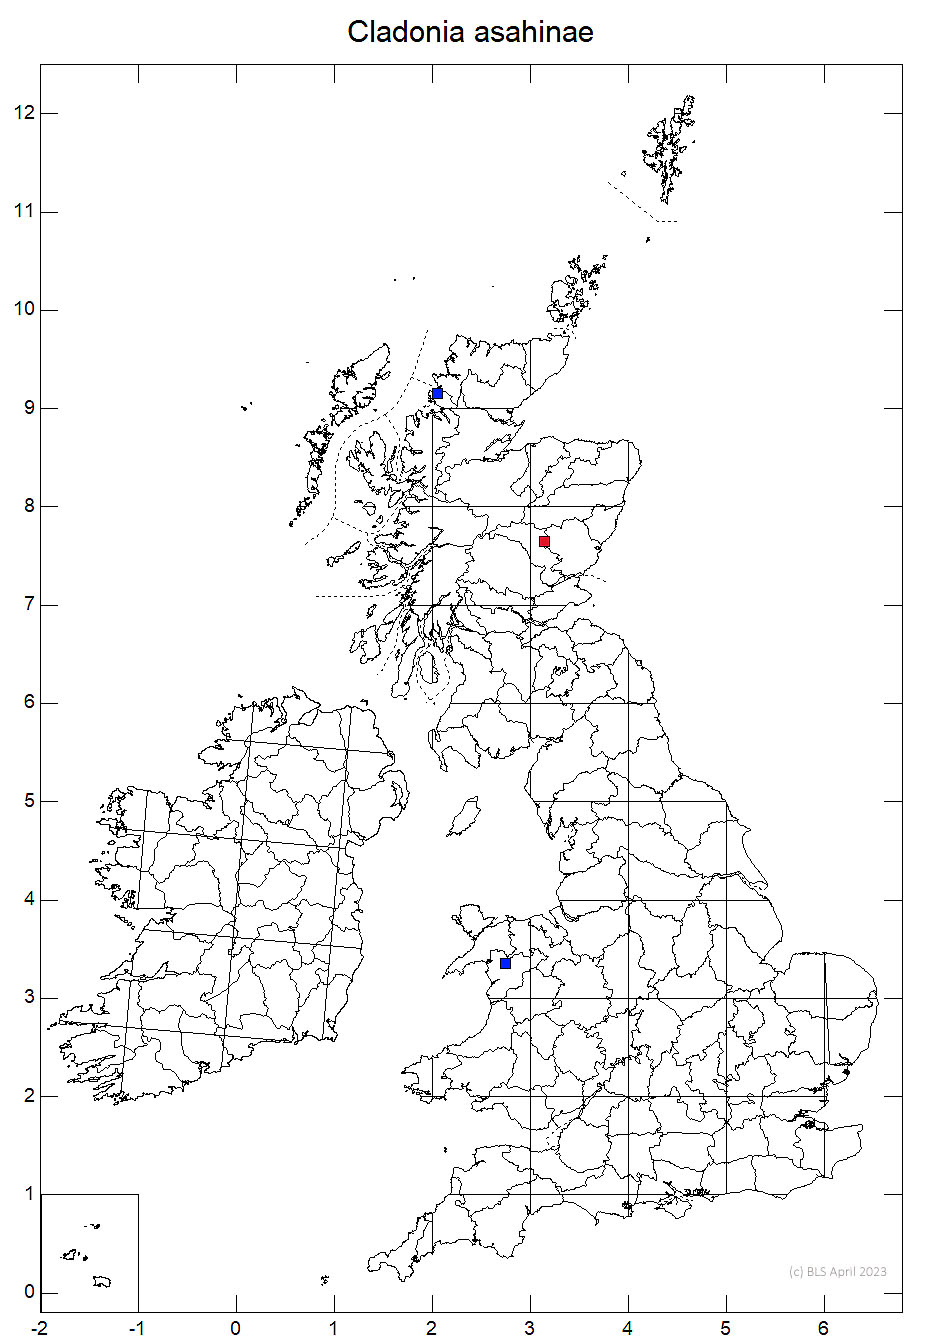 Cladonia asahinae 10km sq distribution map